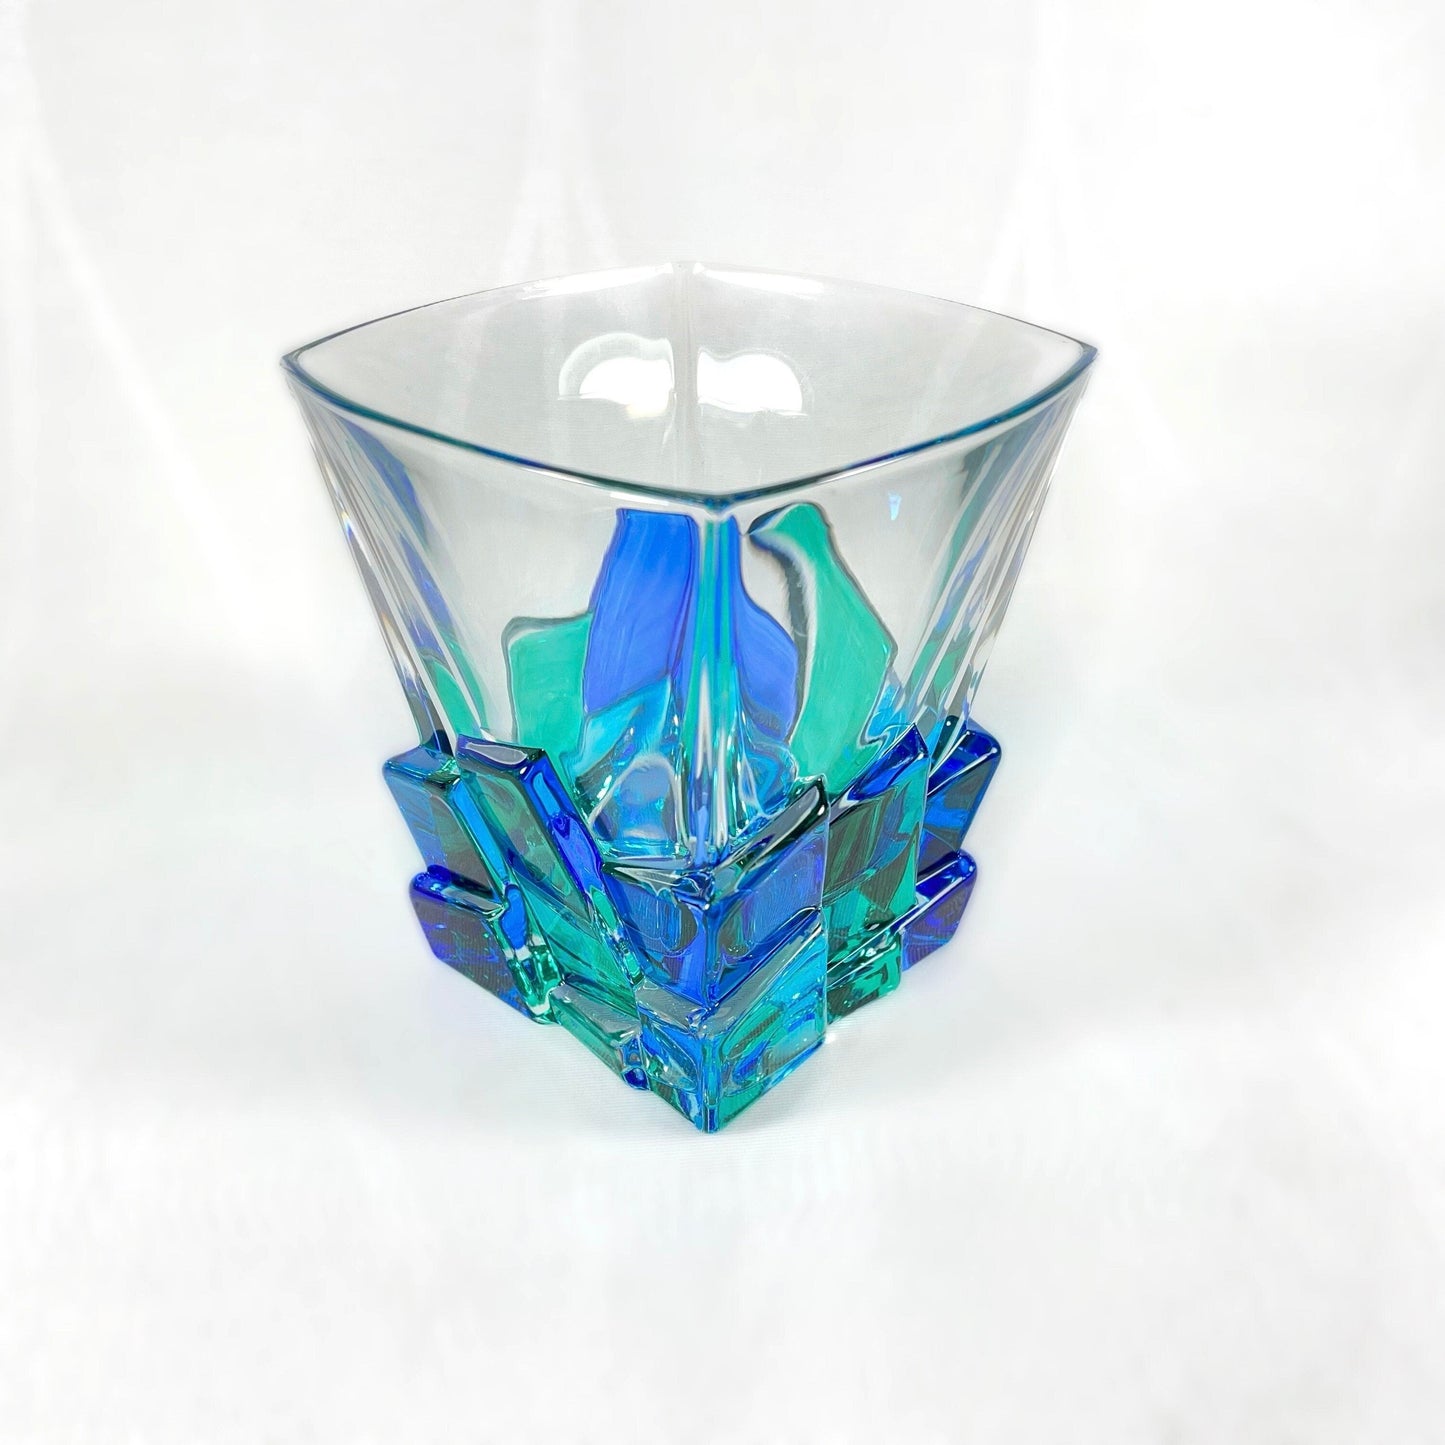 Venetian Glass Crack Whiskey Tumbler - Handmade in Italy, Colorful Murano Glass